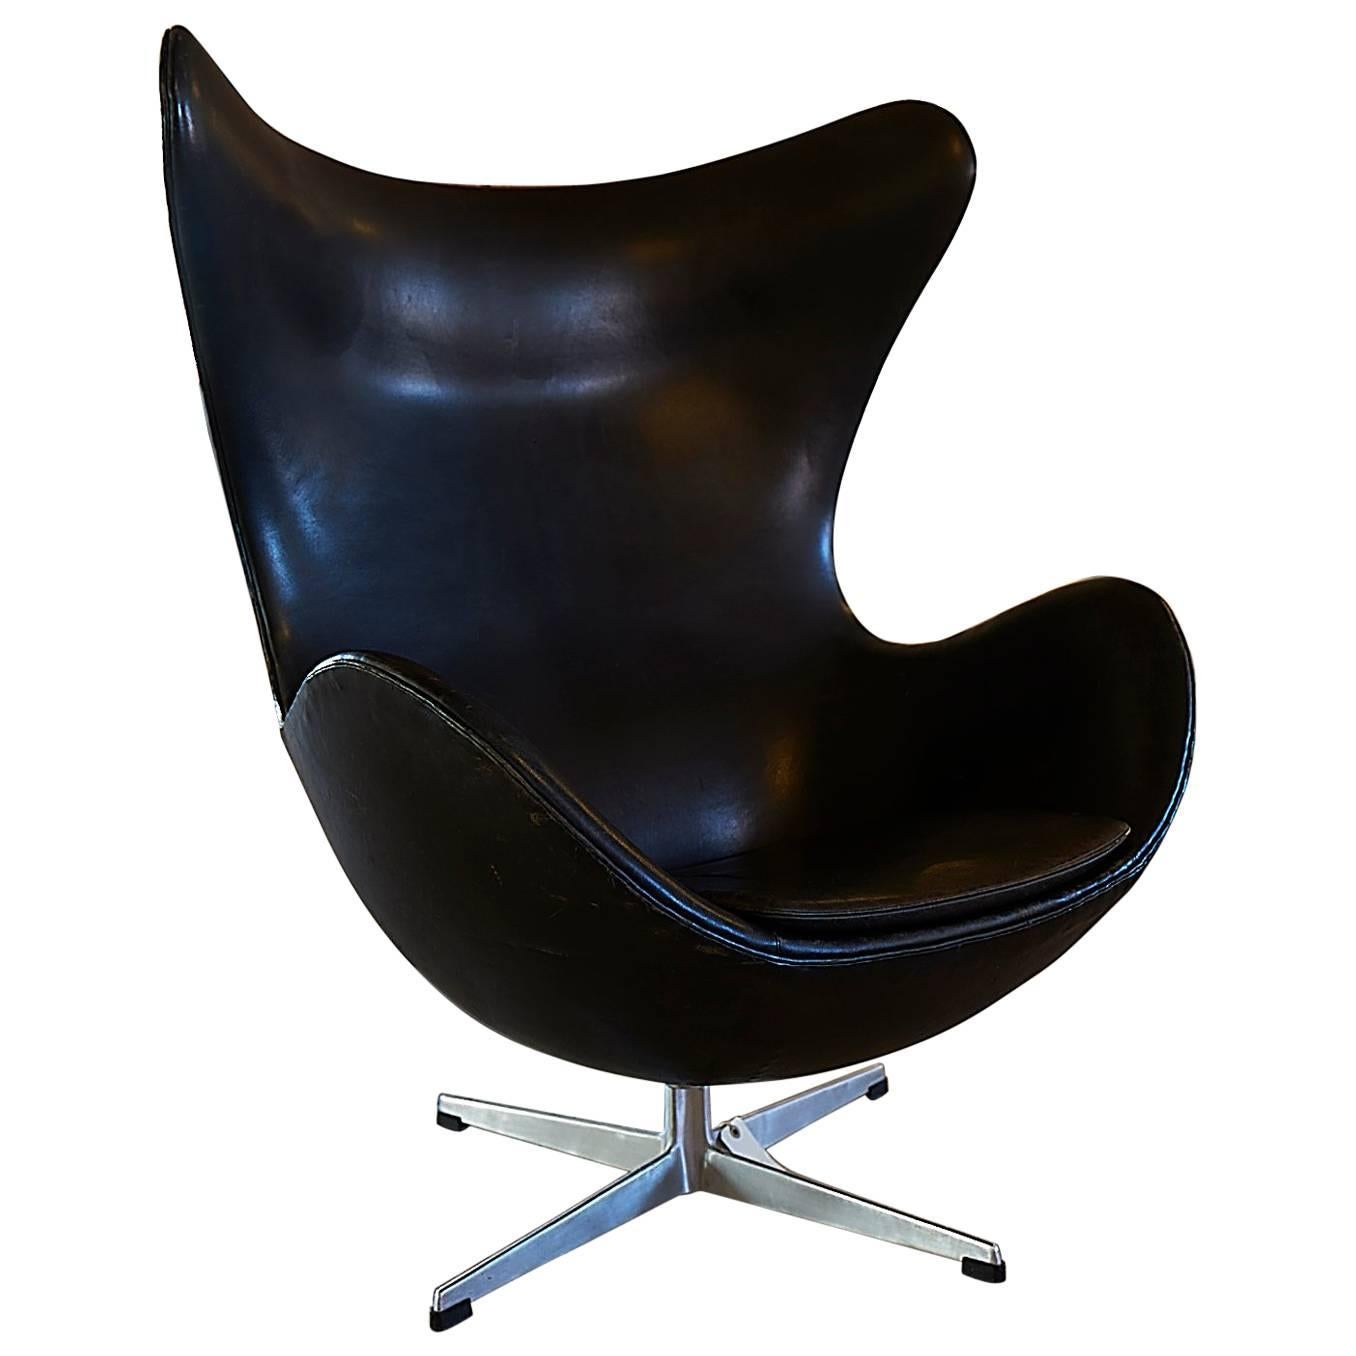 Arne Jacobsen Egg Chair, Original from the 1960s